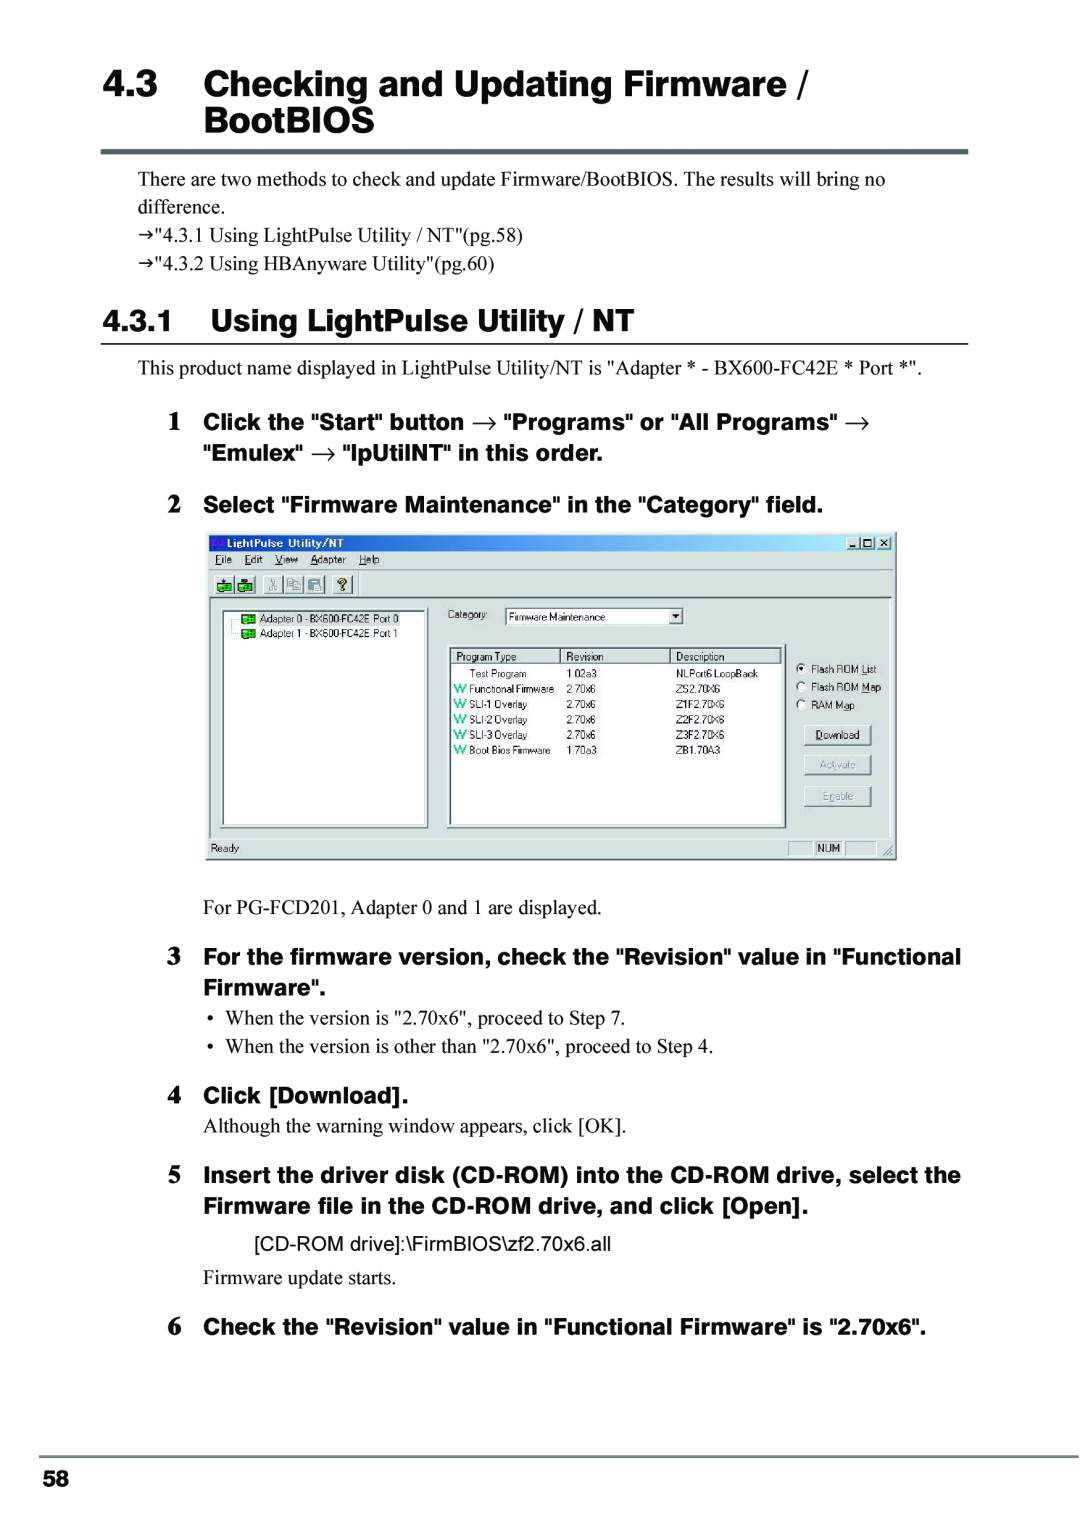 Fujitsu 4Gbit/s FC I/O Modules manual Checking and Updating Firmware / BootBIOS, Using LightPulse Utility / NT 